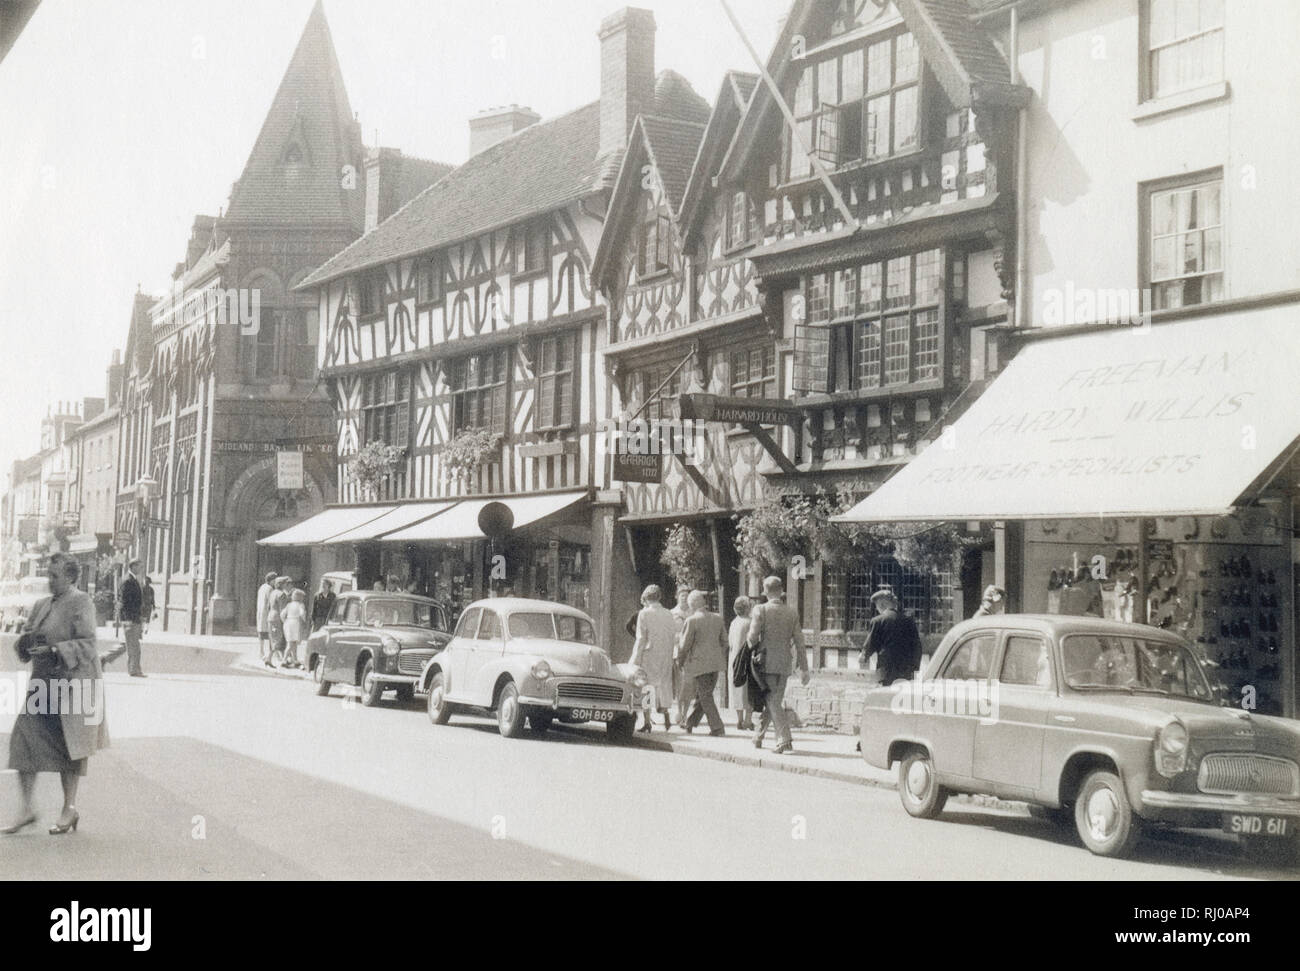 Antique c1950 photograph, The Garrick Inn and Harvard House on High Street in Stratford-upon-Avon, England, UK. SOURCE: ORIGINAL VINTAGE PHOTOGRAPH Stock Photo